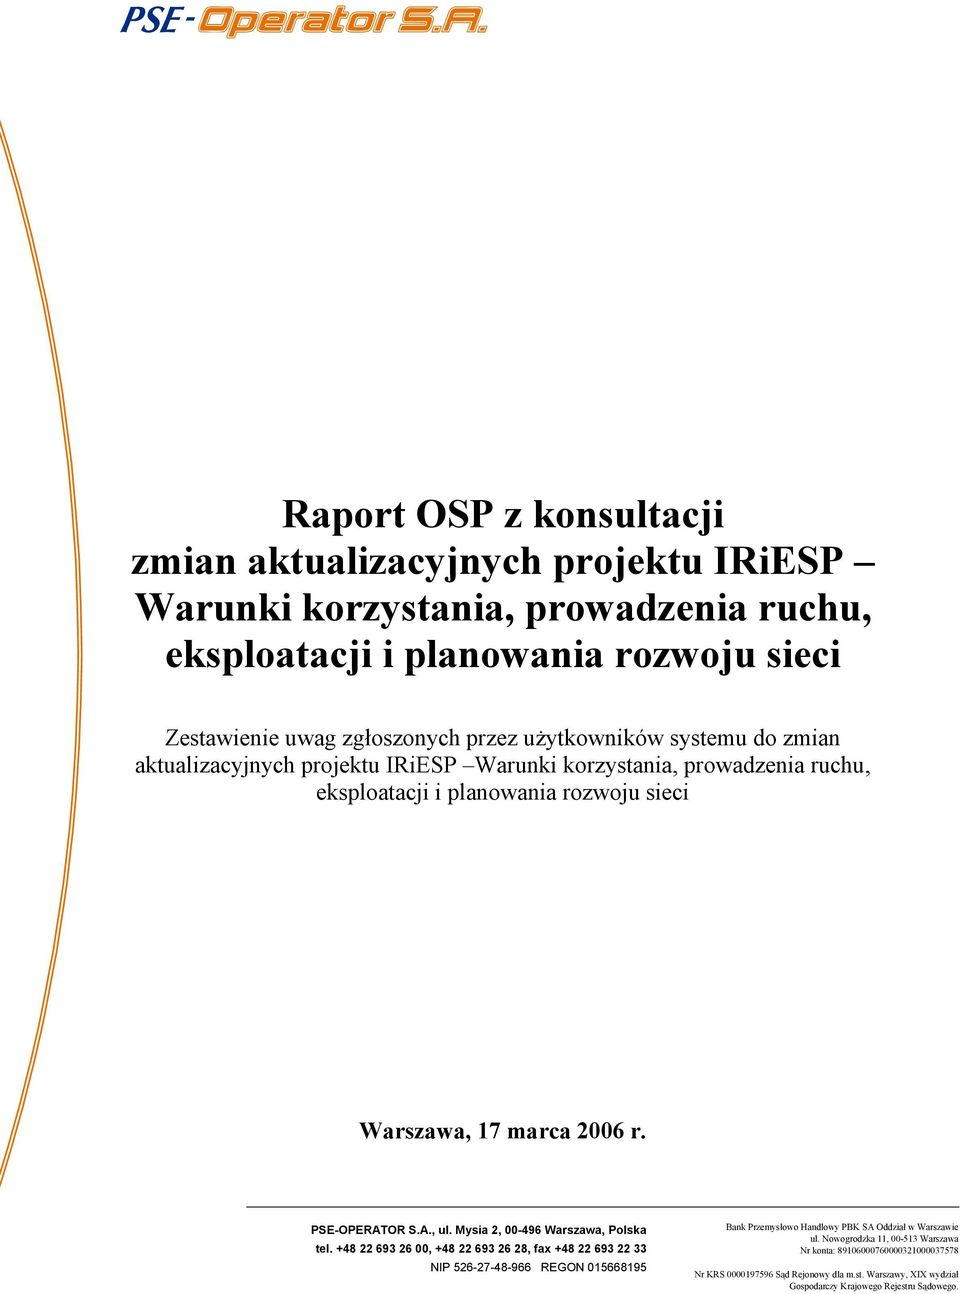 PSE-OPERATOR S.A., ul. Mysia 2, 00-496 Warszawa, Polska tel.